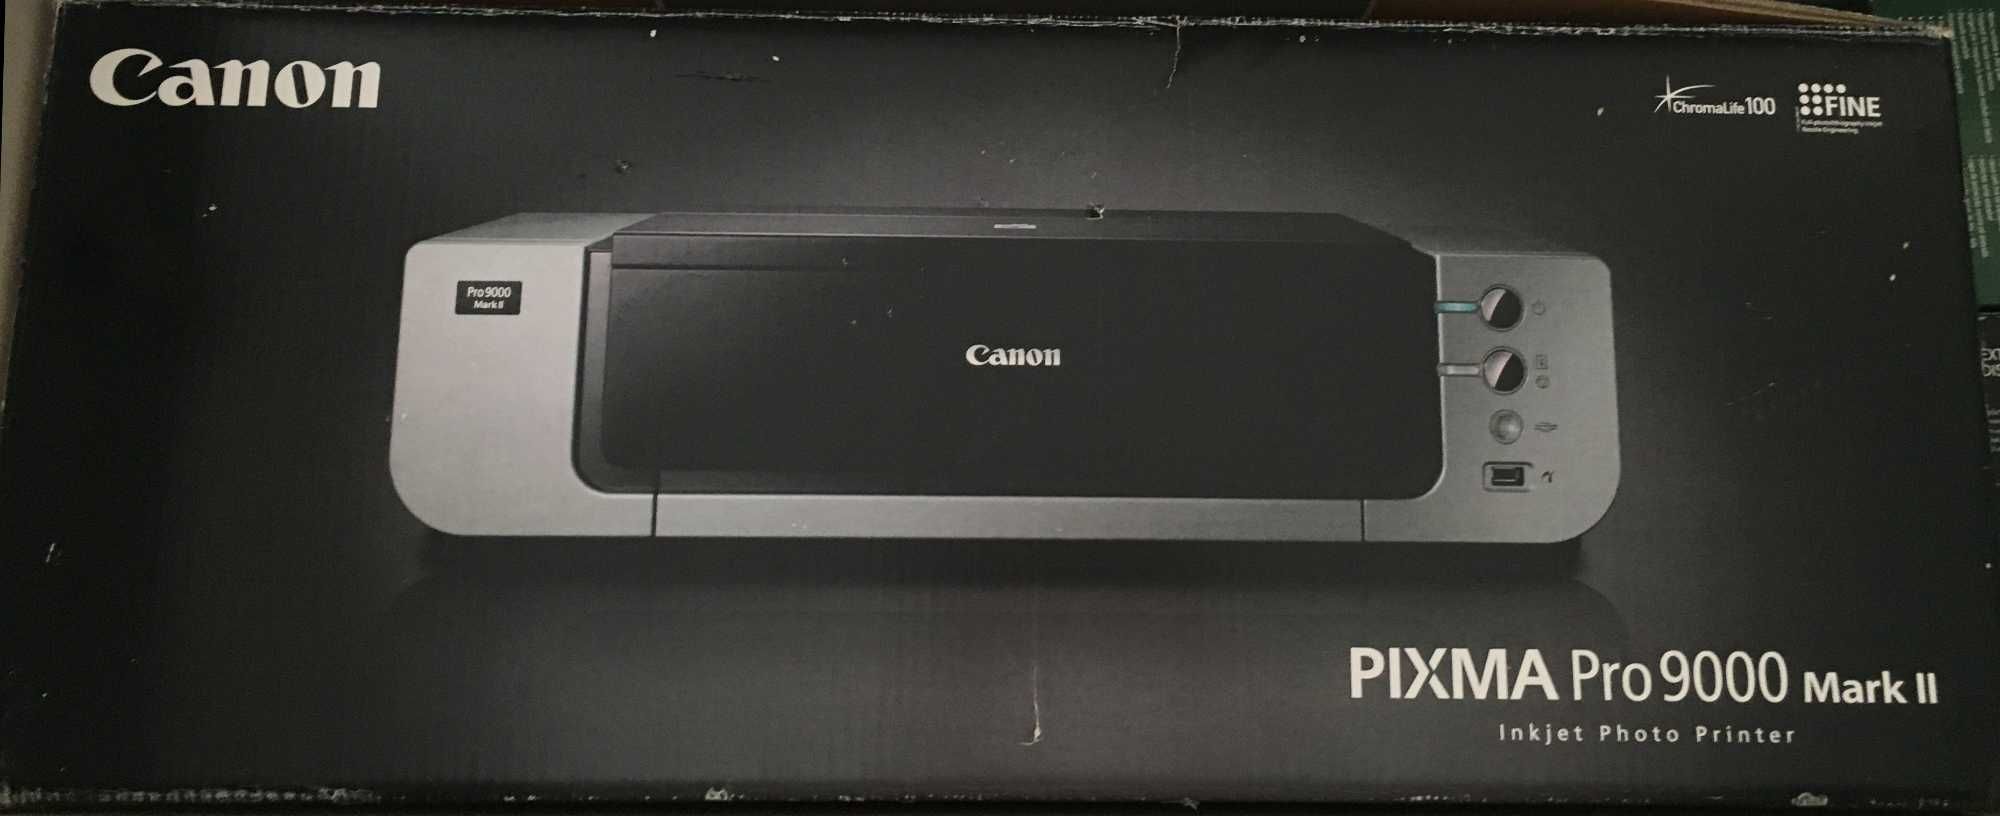 Impressora A3 - CANON - PIXMA Pro 9000 Mark II - Inkjet Photo Printer